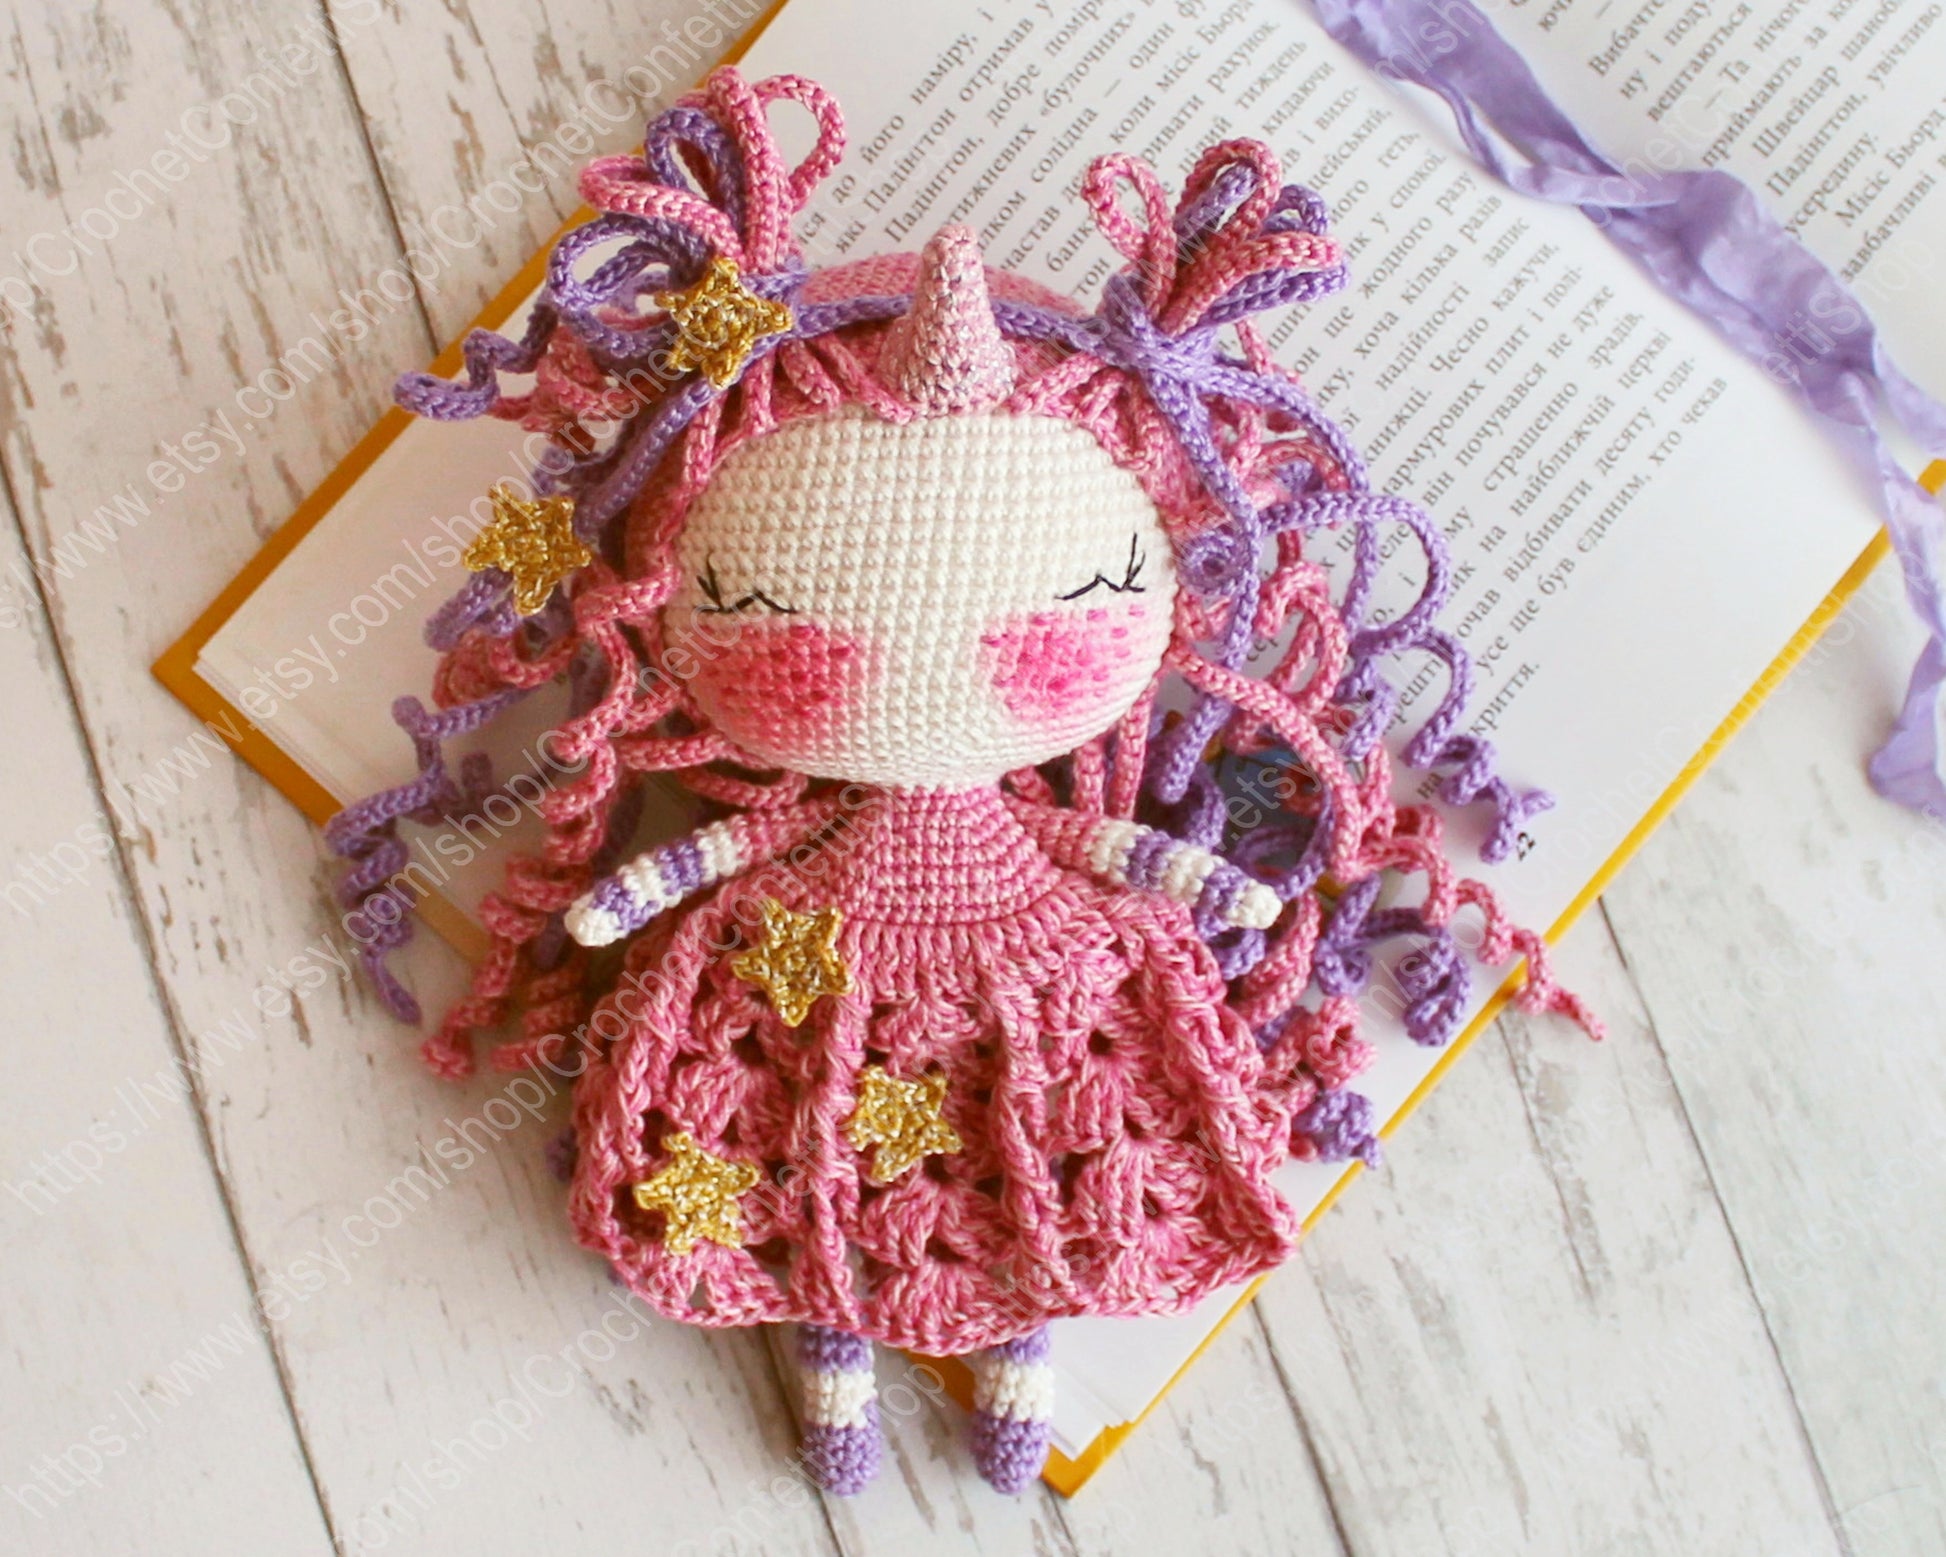 Crochet Doll Amigurumi Pattern Queen Sisters, PDF Pattern, English